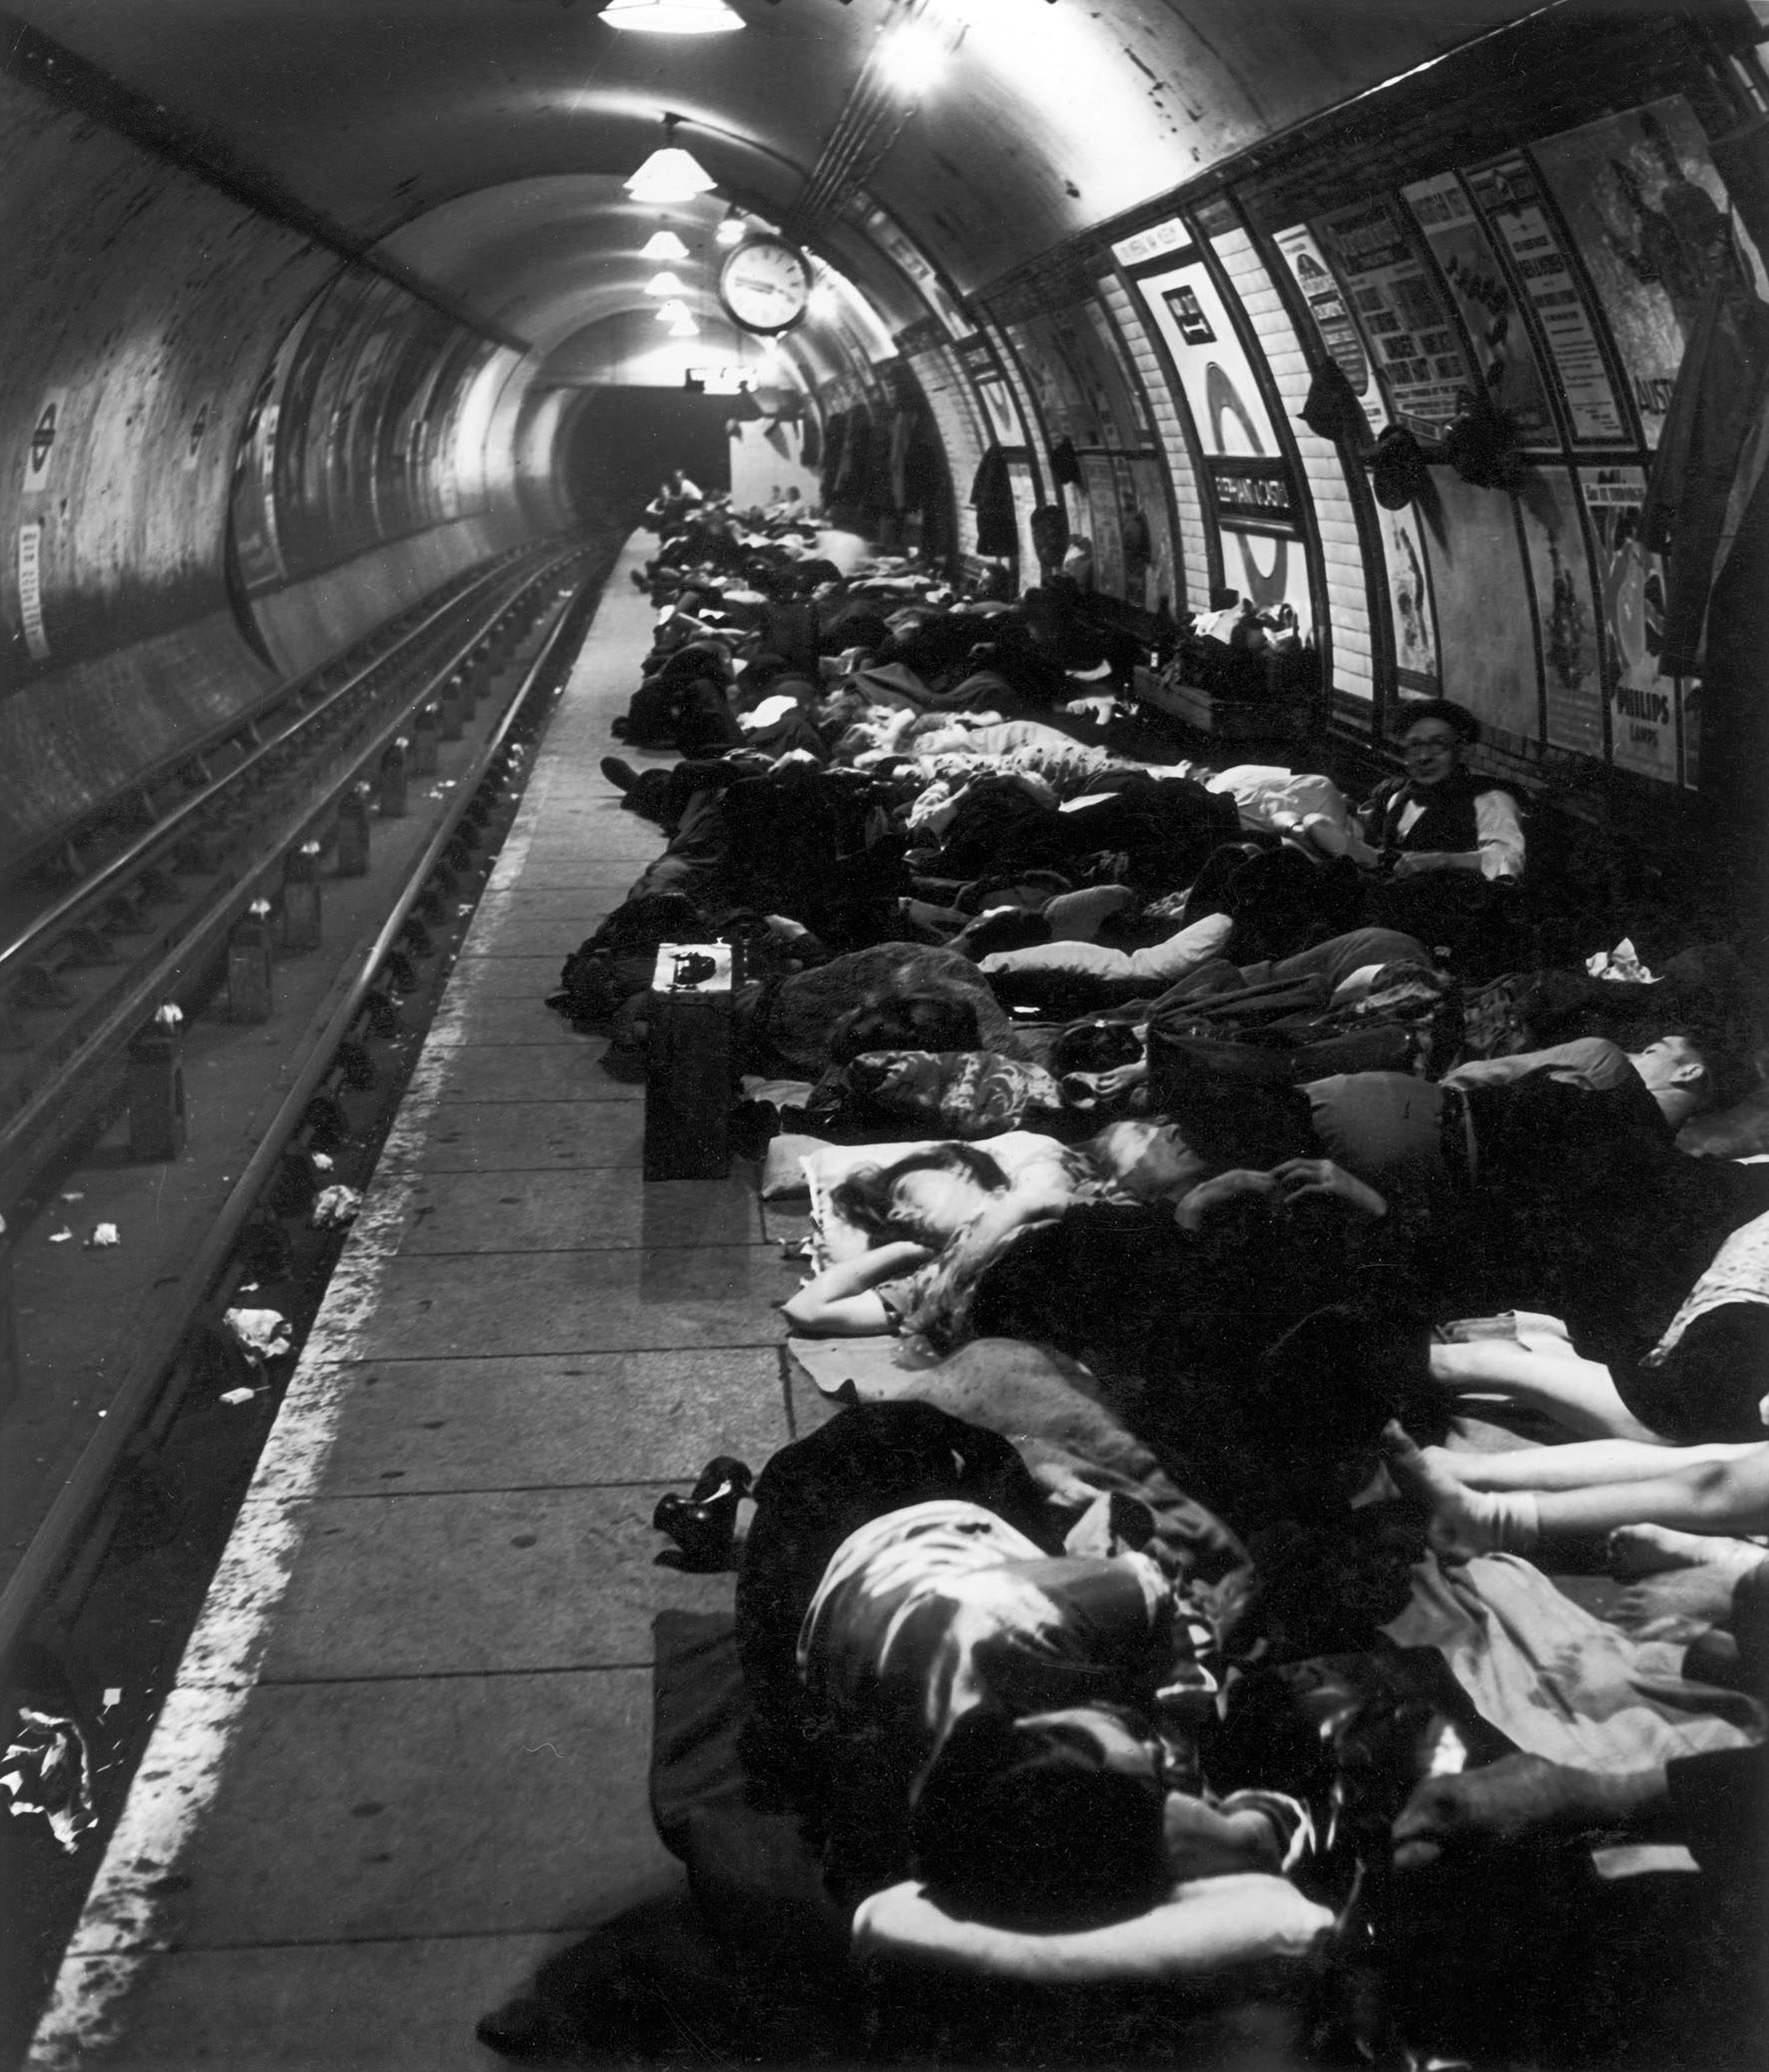 People sleeping in Elephant and Castle Underground platform in 1940